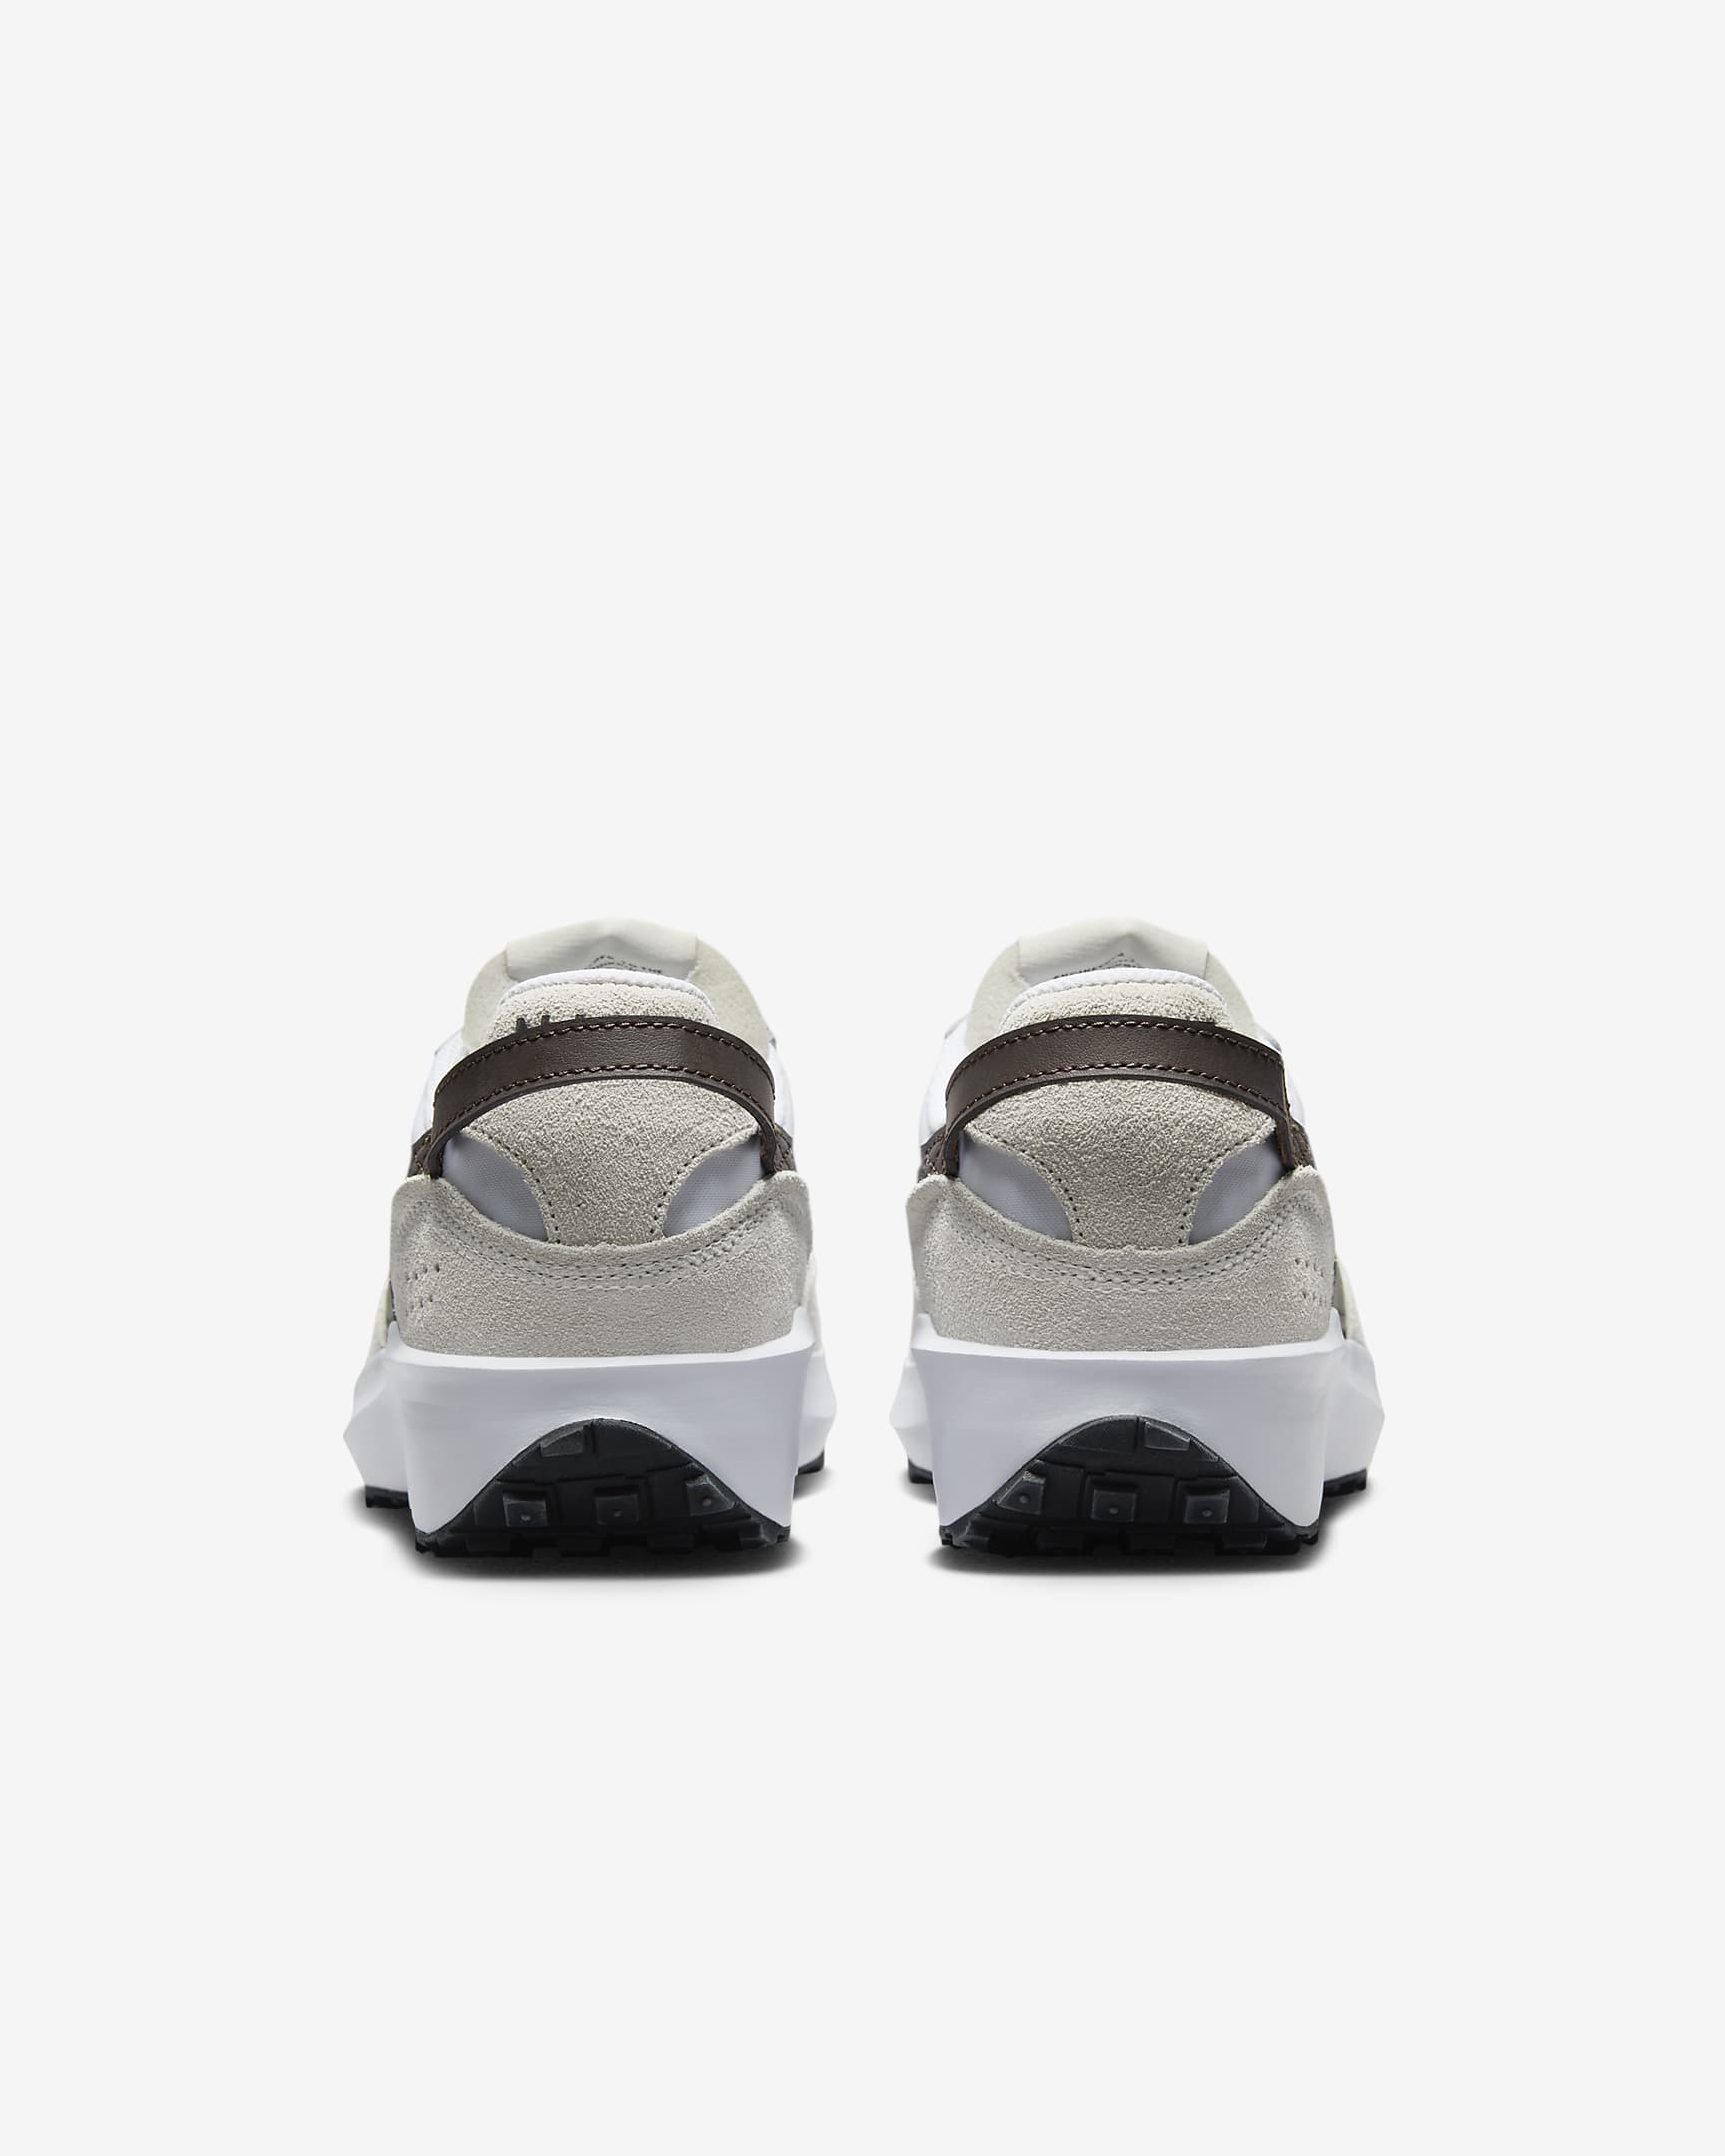 Nike Waffle Debut Women's Shoes - White/Phantom/Baroque Brown